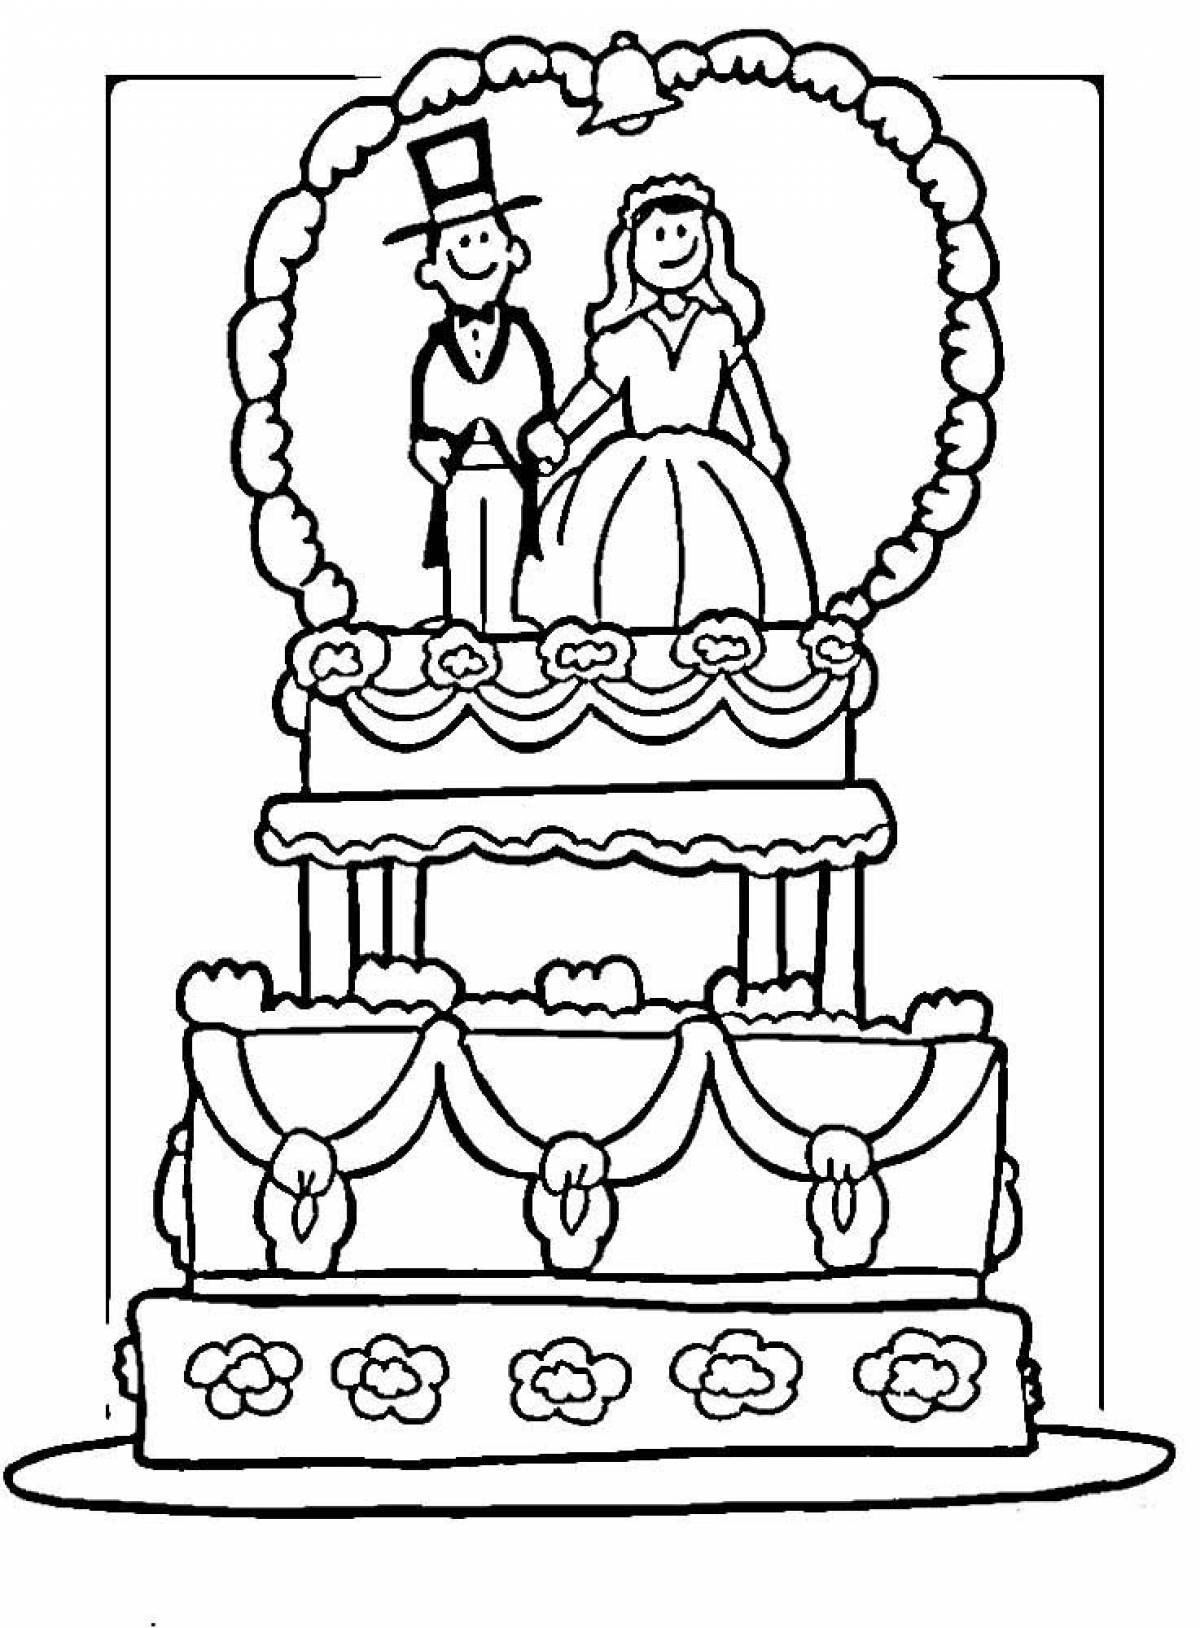 Photo A wedding cake